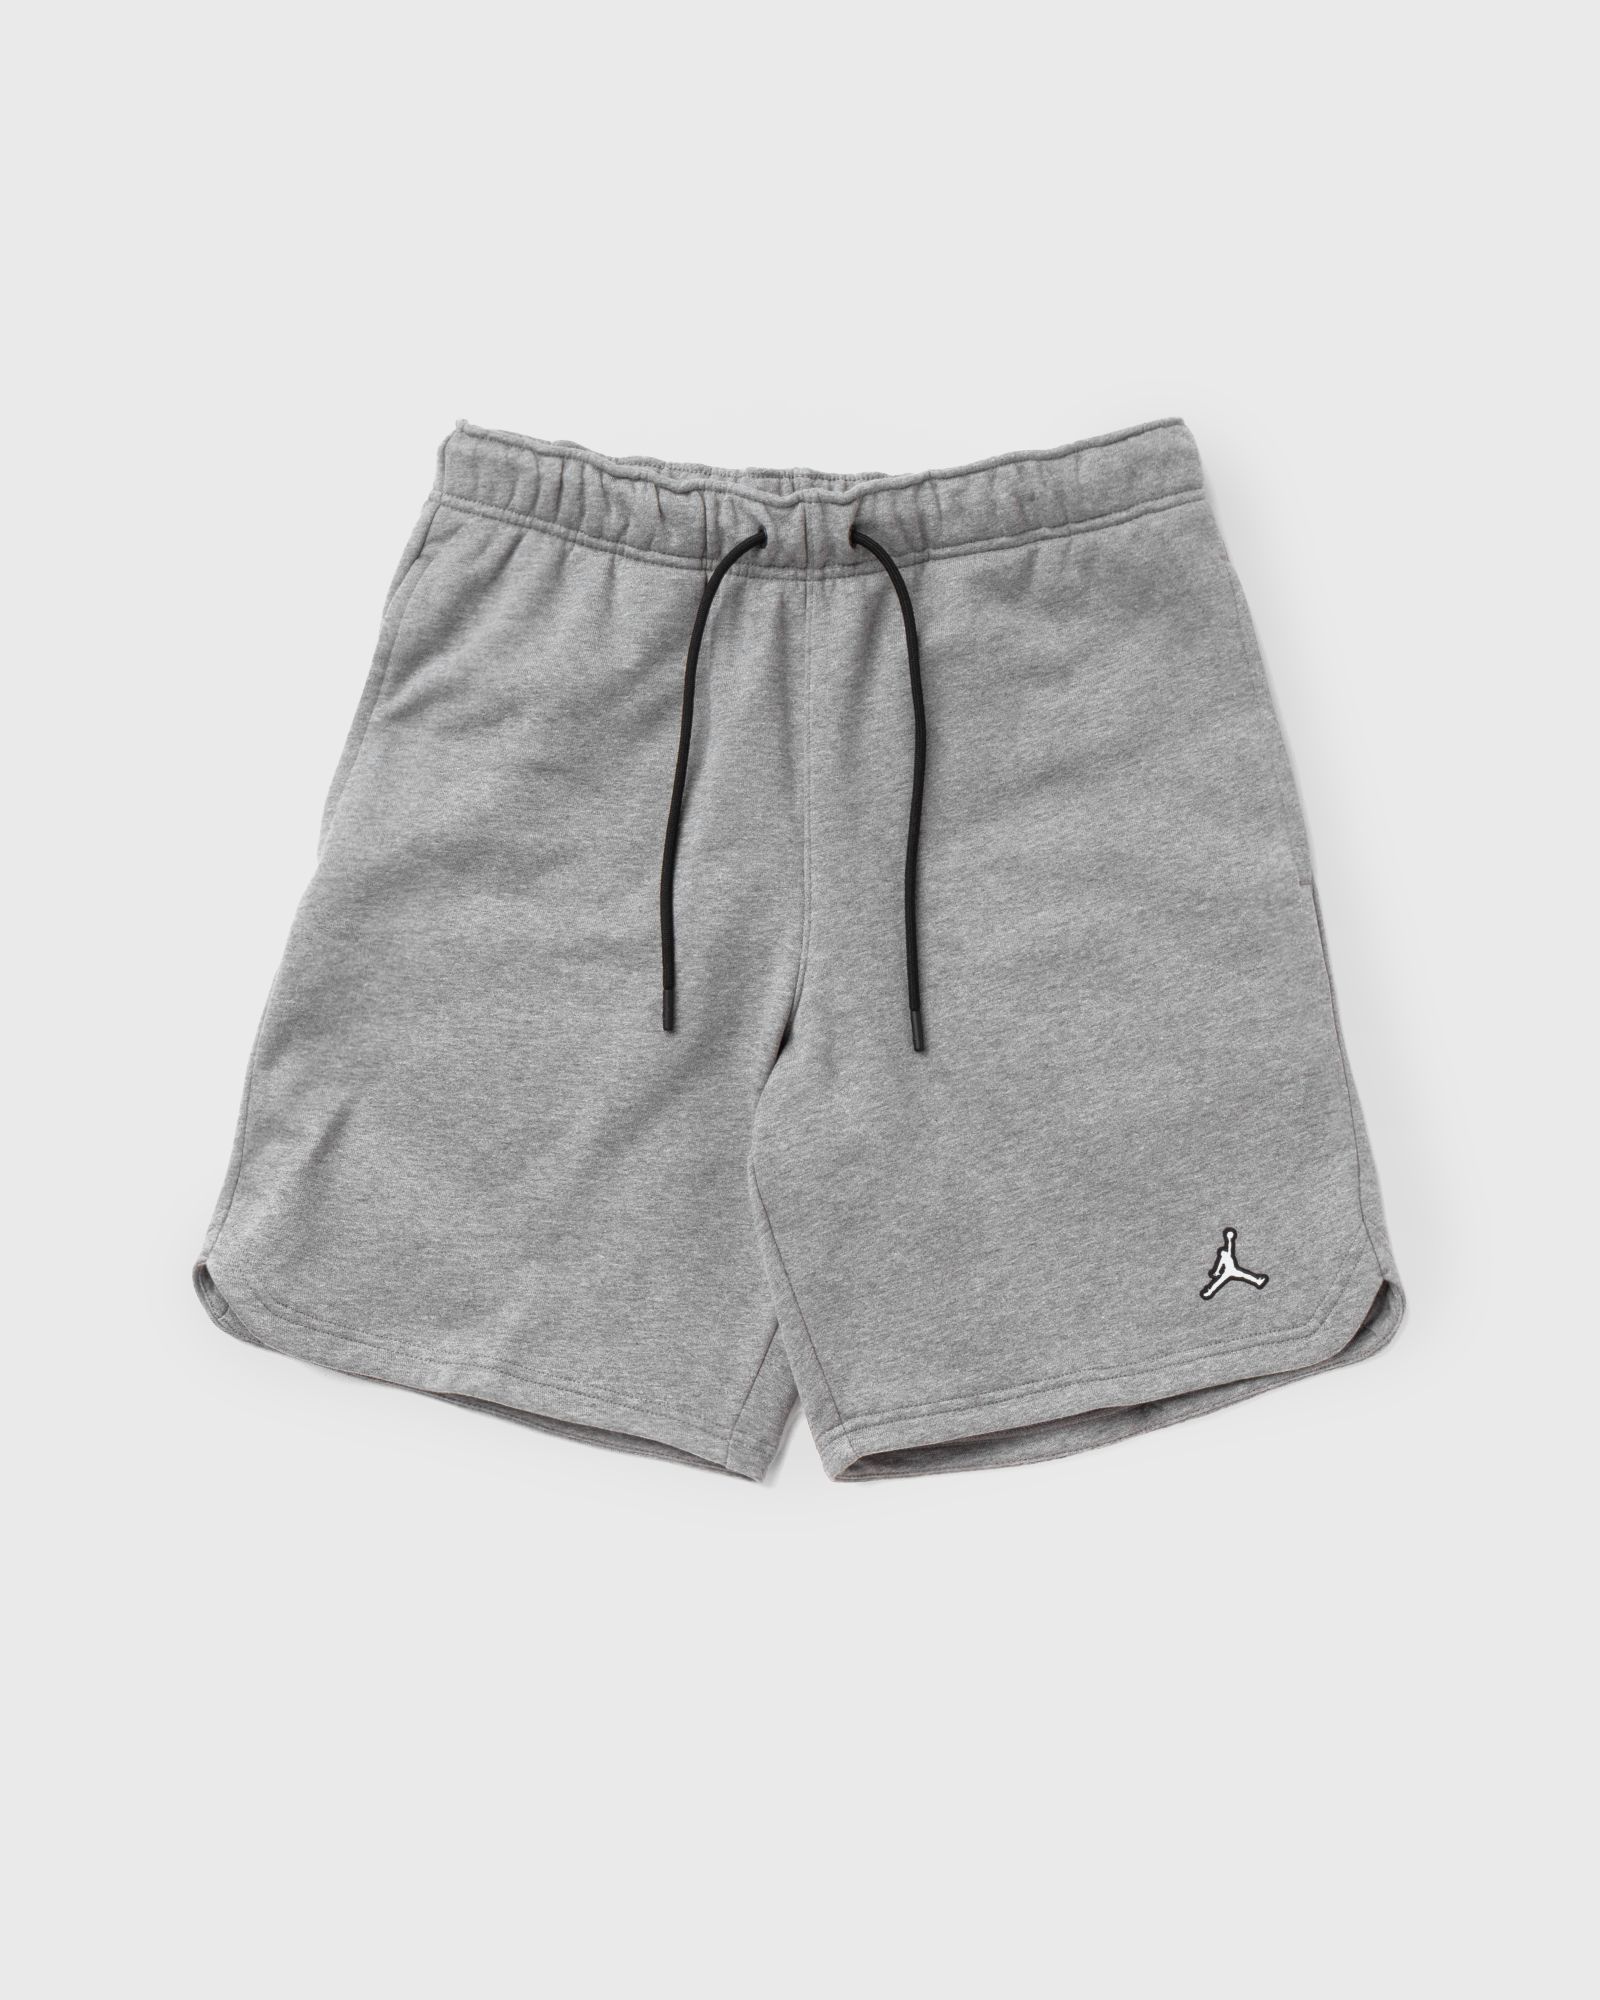 Jordan - essential fleece short men sport & team shorts grey in größe:xl